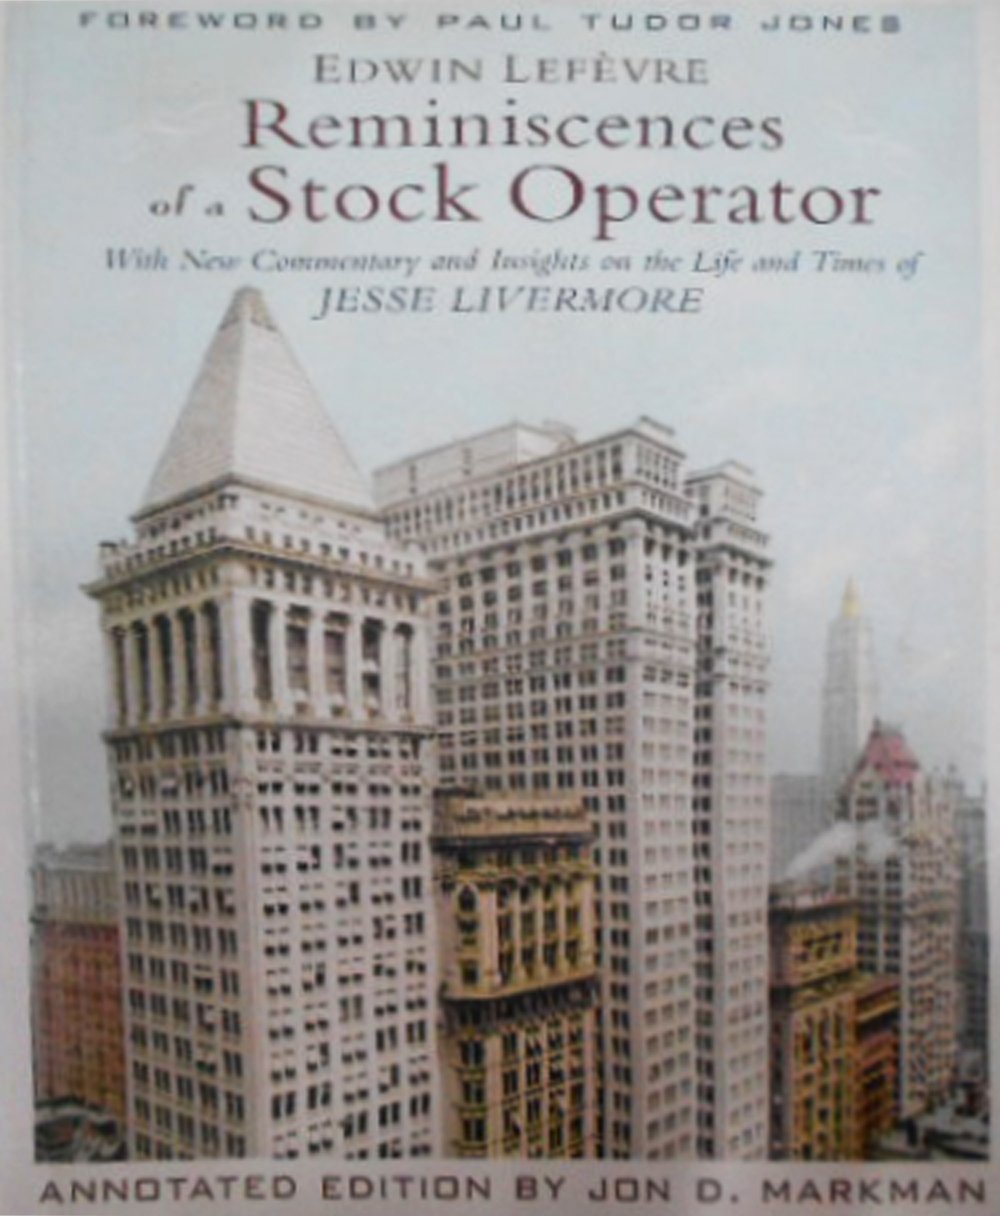 reminiscences of a stock operator pdf